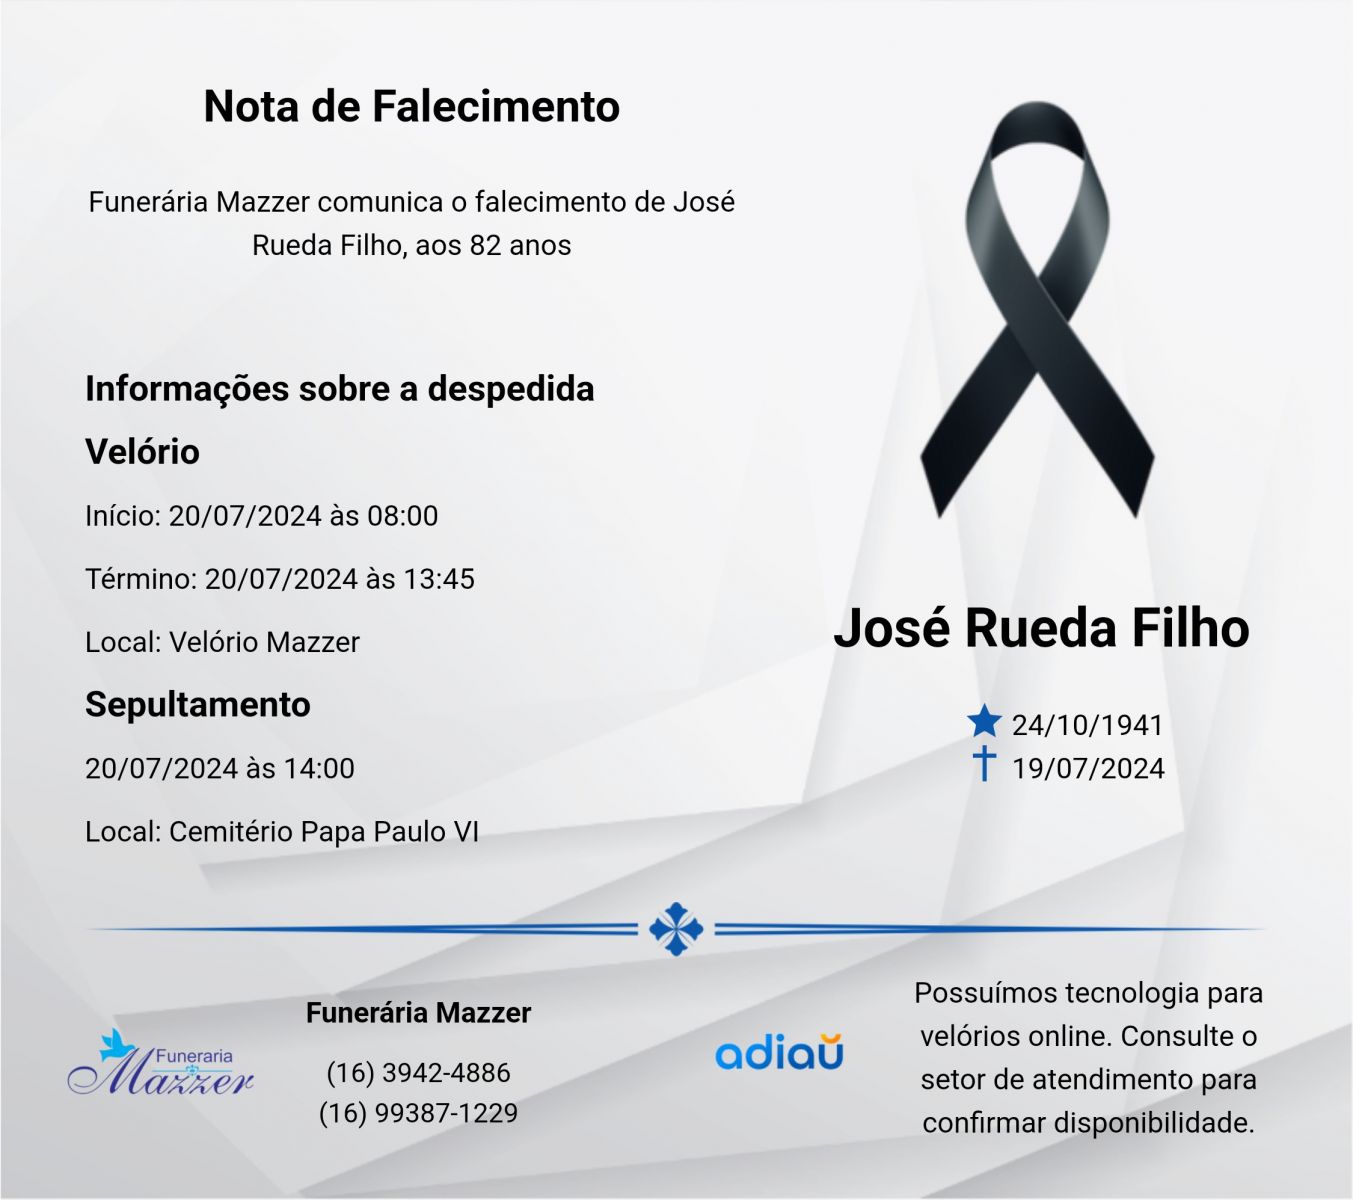 José Rueda Filho